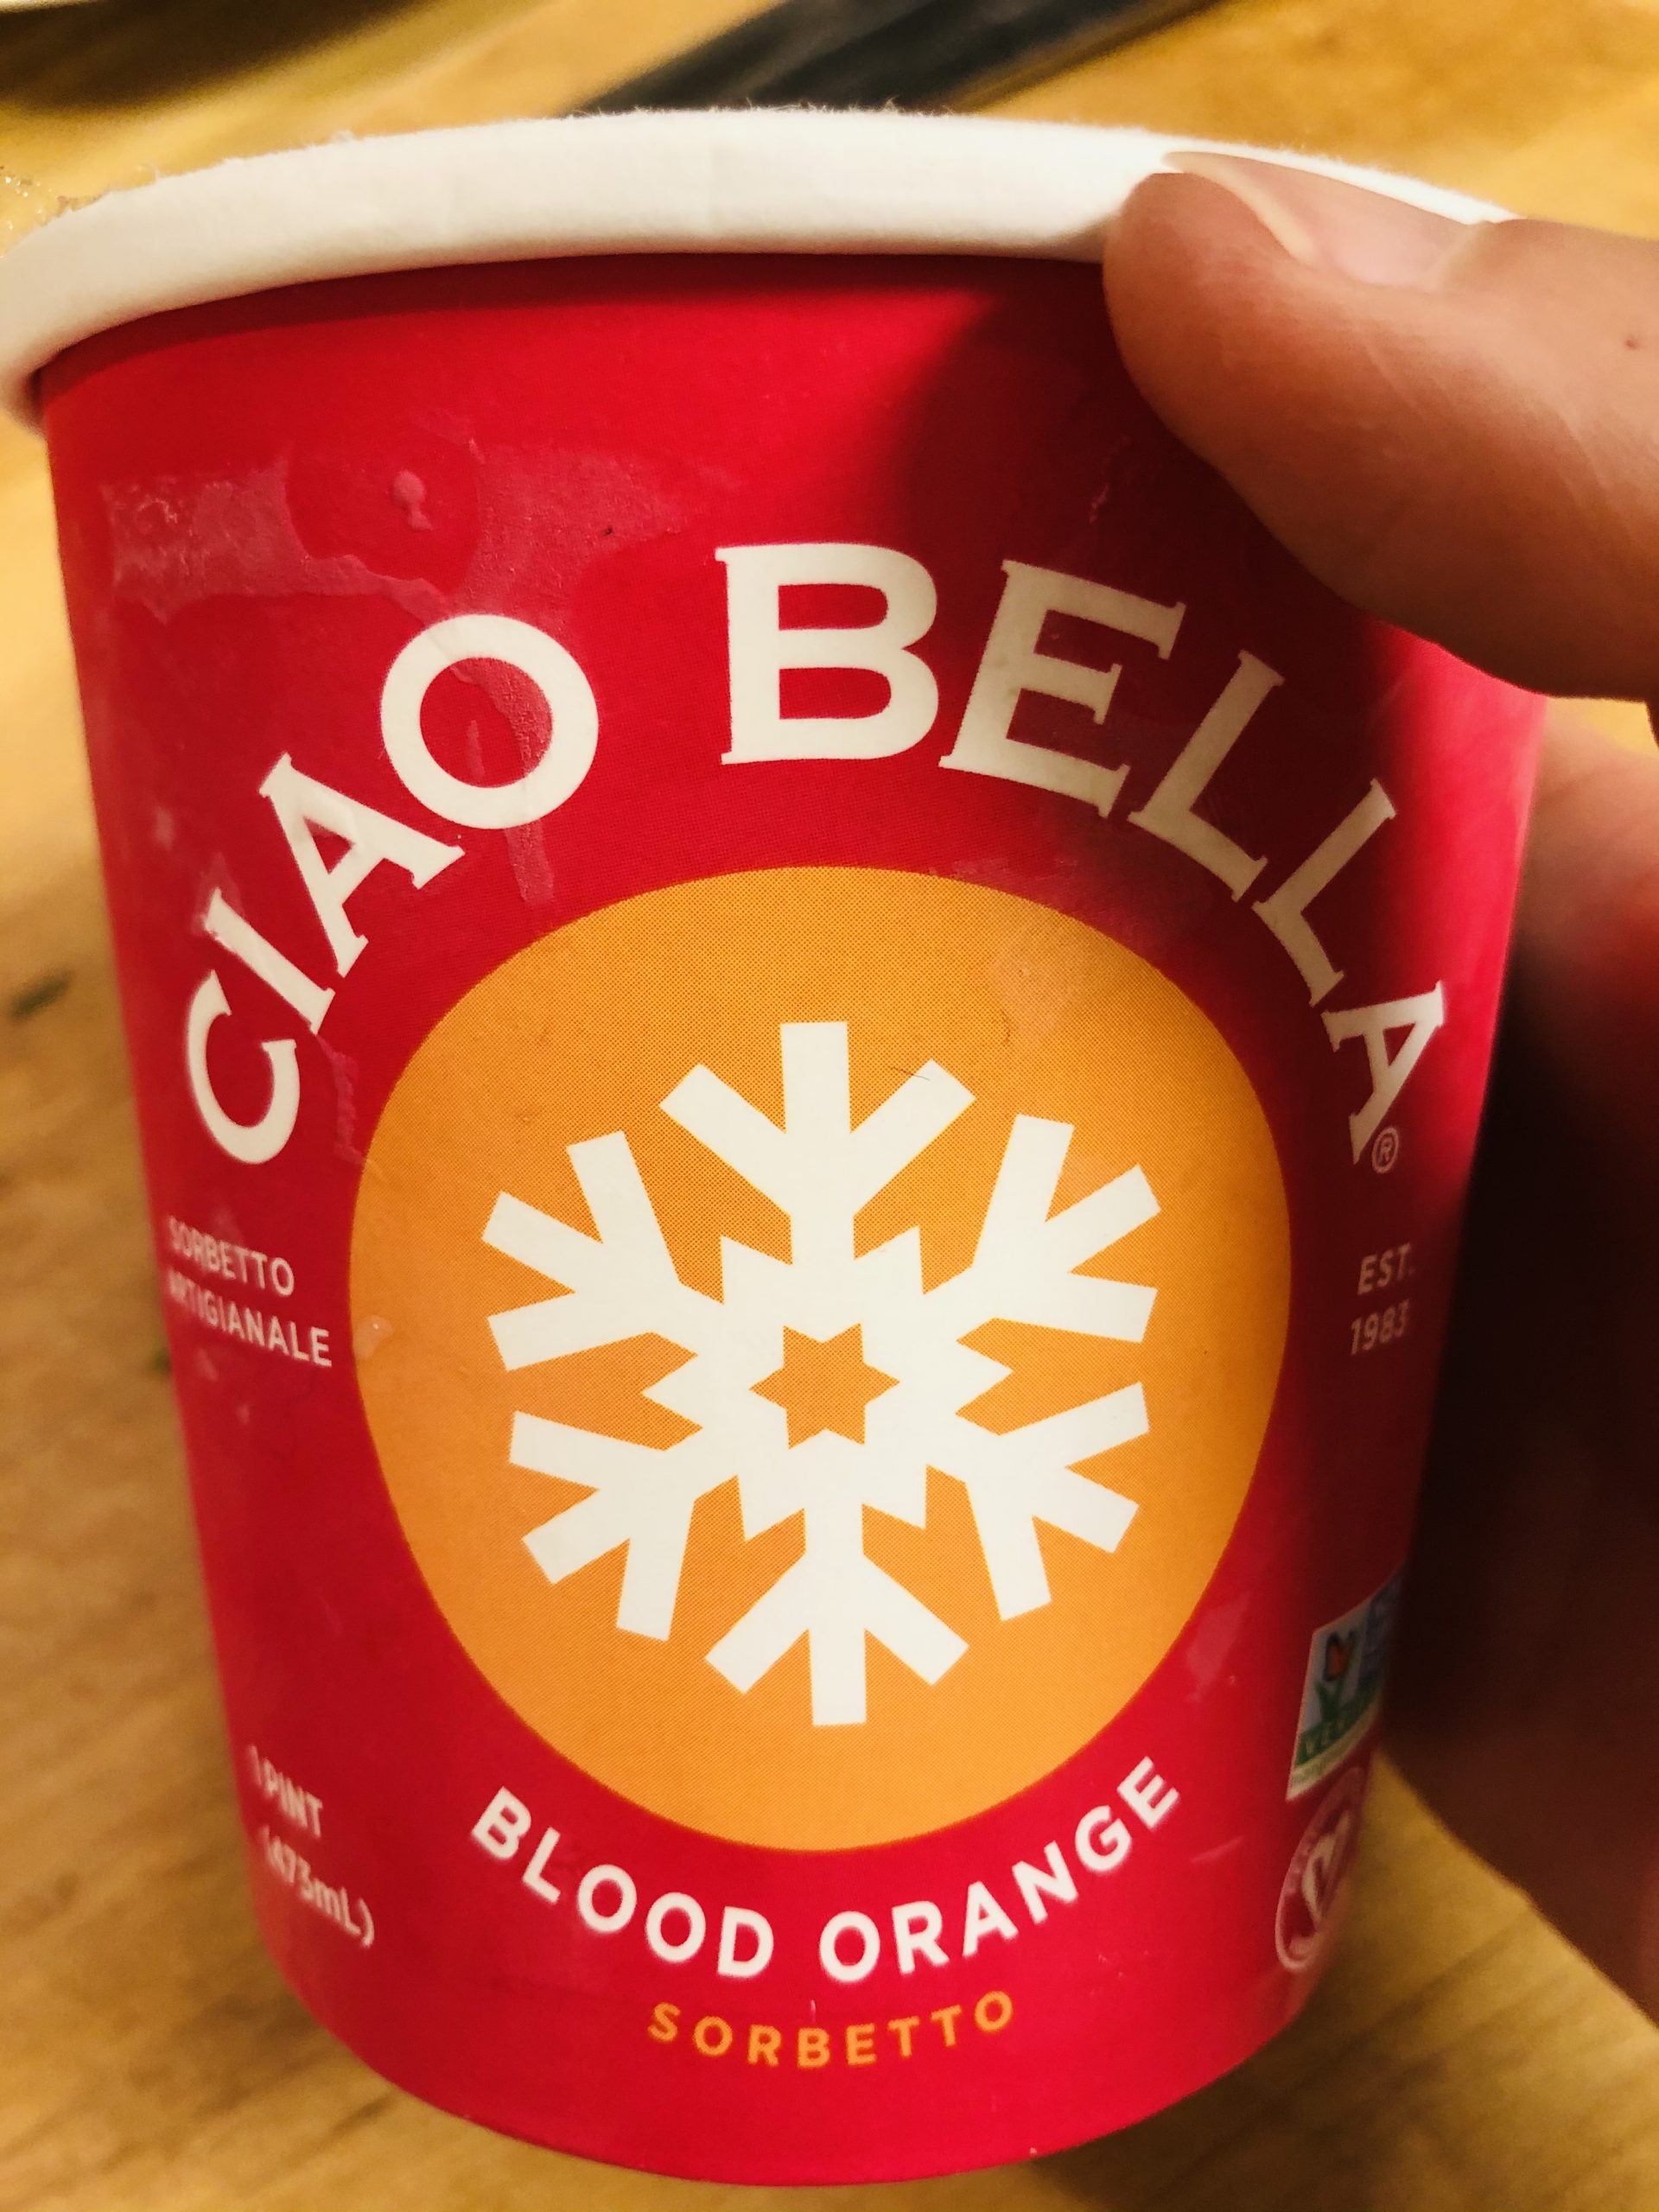 Ciao Bella Blood Orange Sorbet